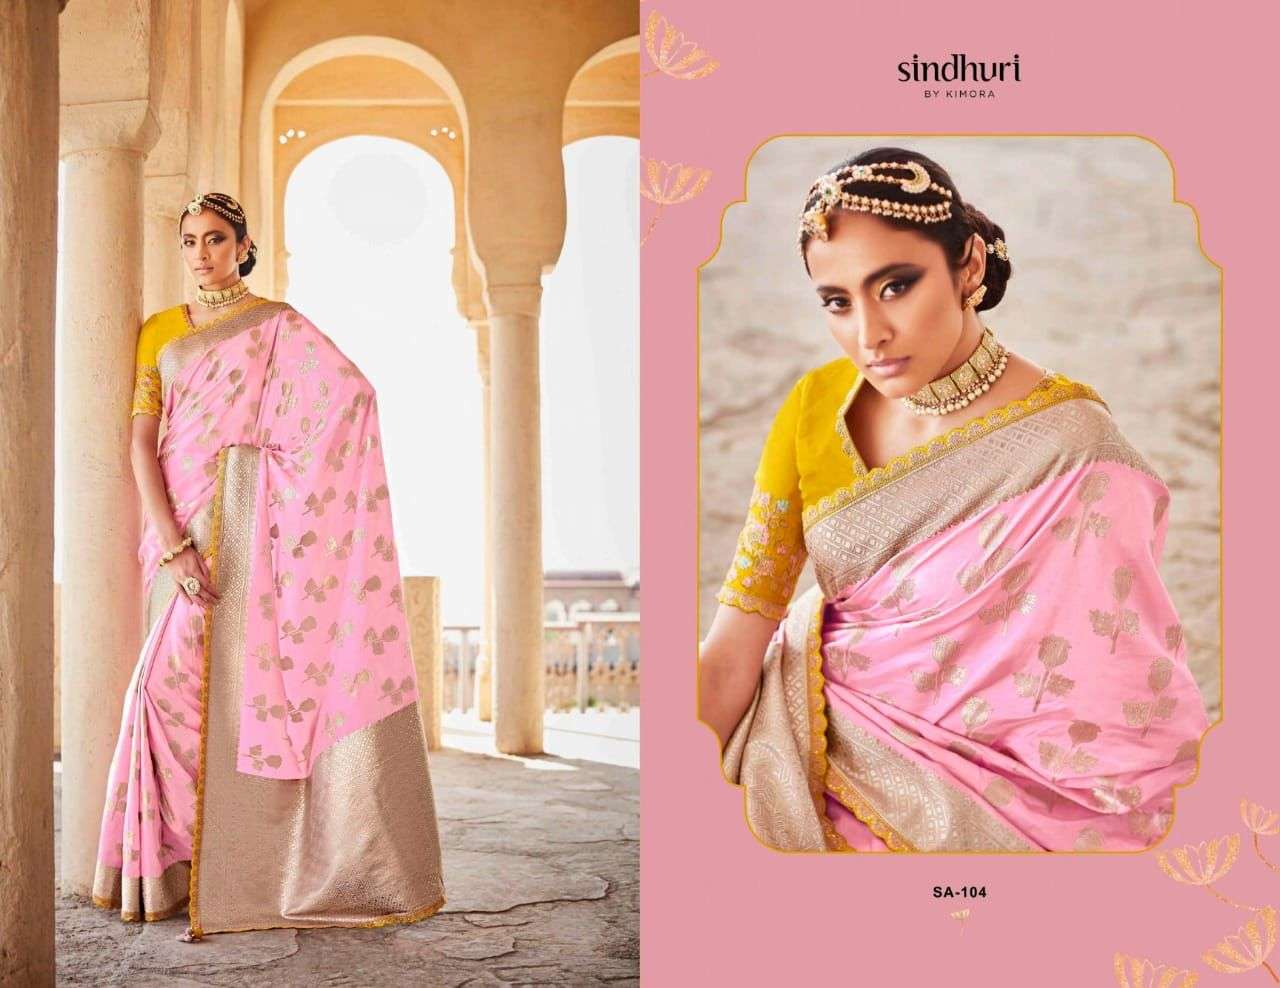 kimora sindhuri rani 104 design pure dola silk single saree at great price 